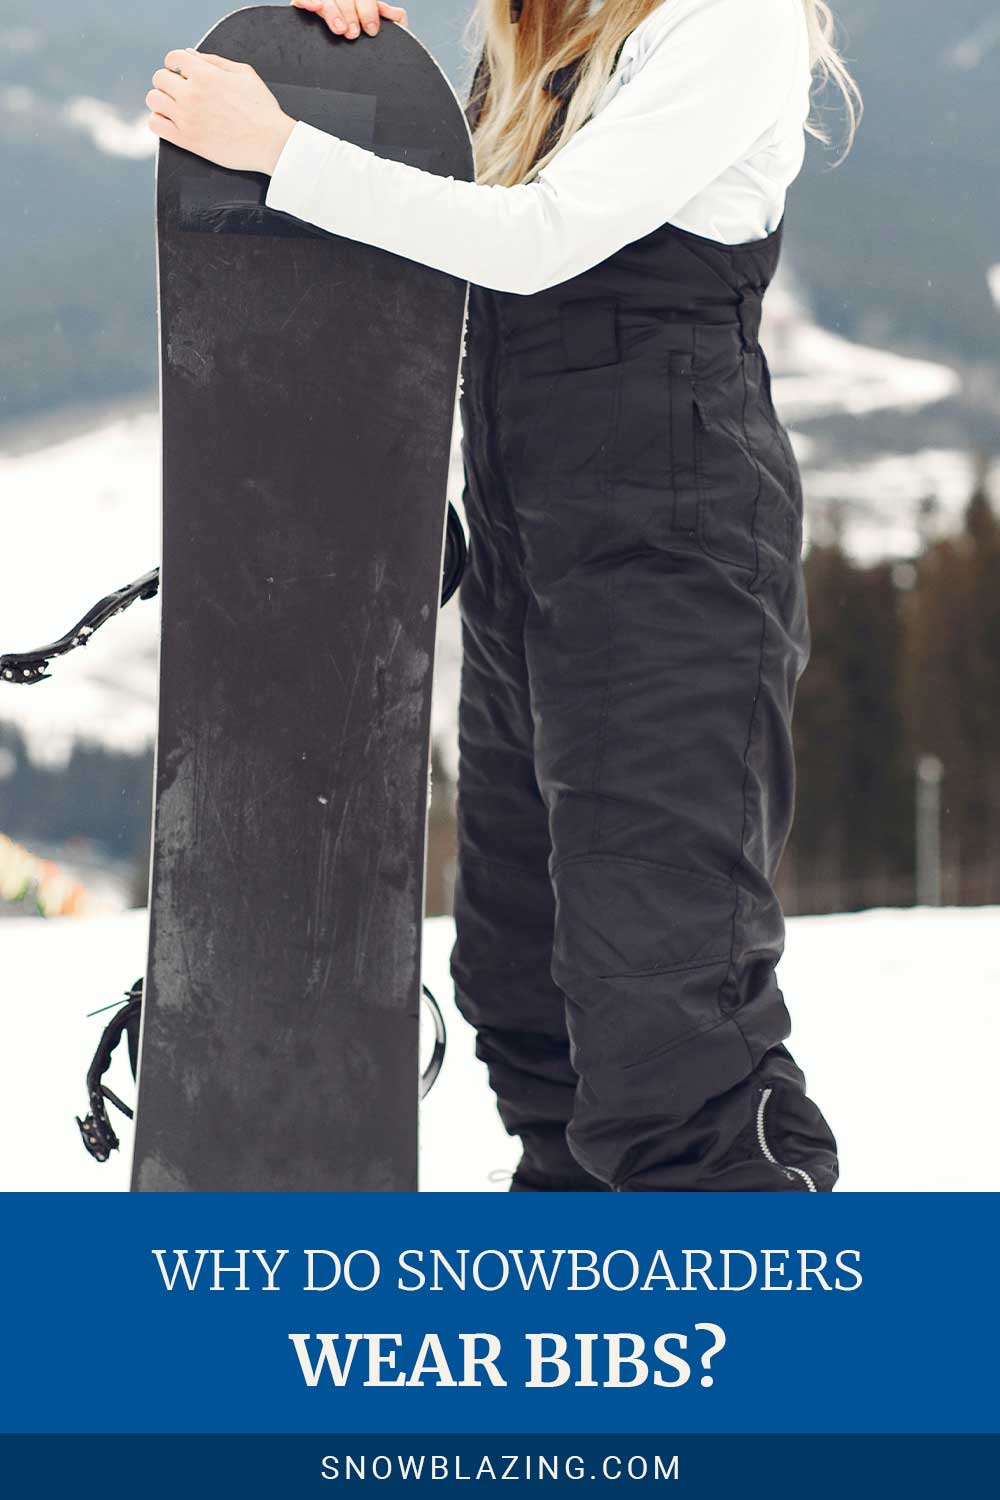 Lady wearing black snowboarding bib holding a snowboard.